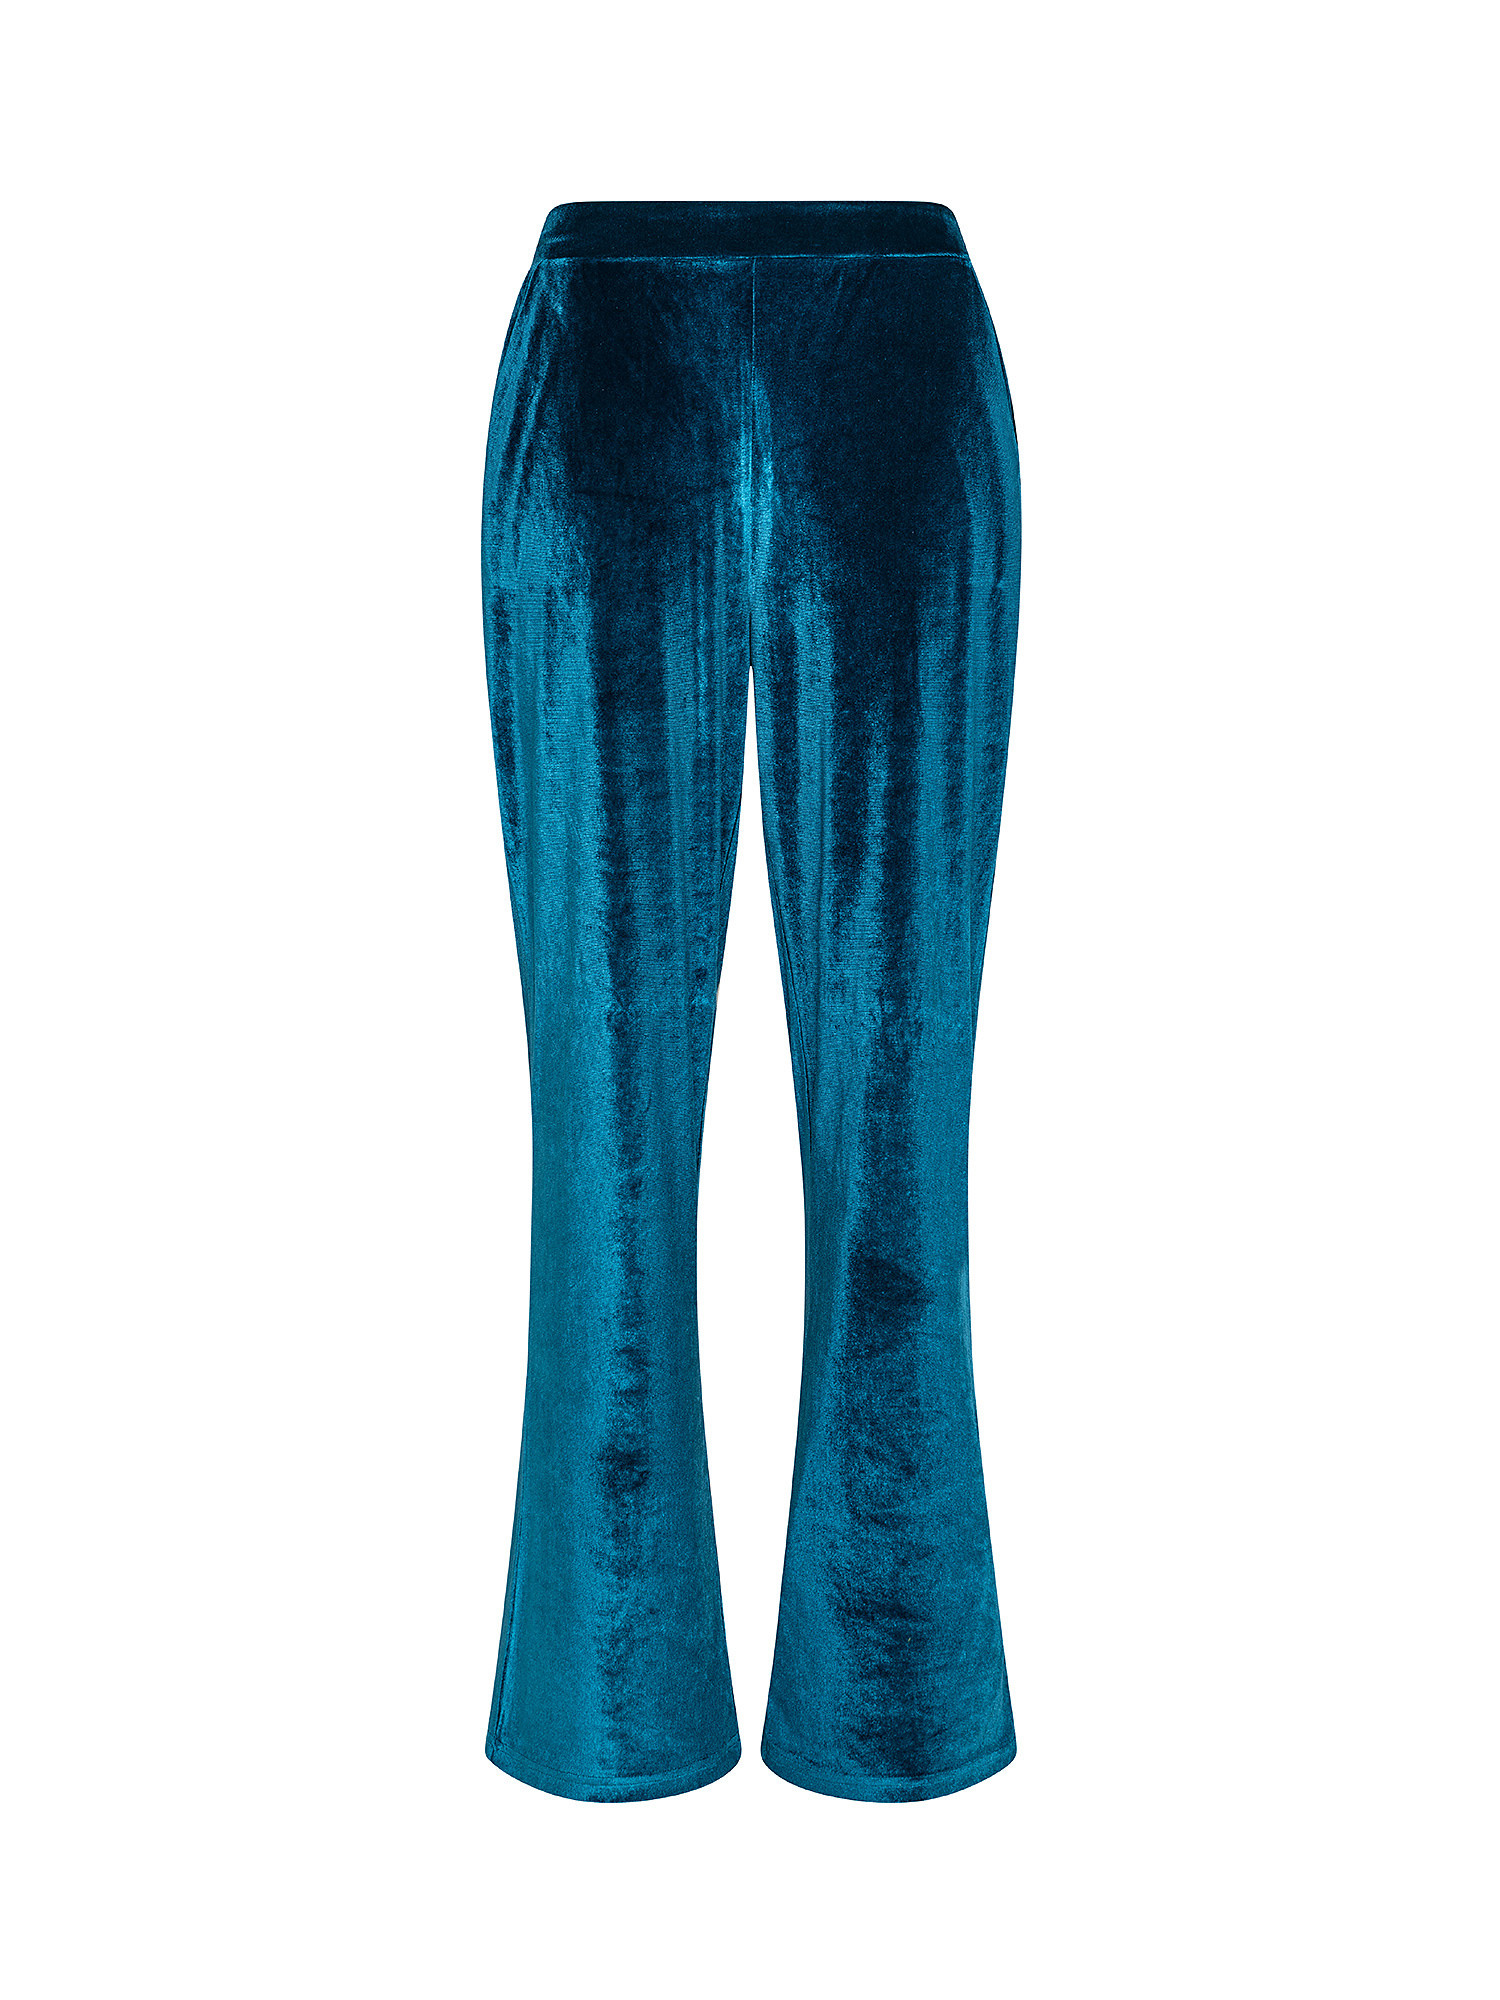 Велюровые брюки Koan Knitwear, зелено-голубой